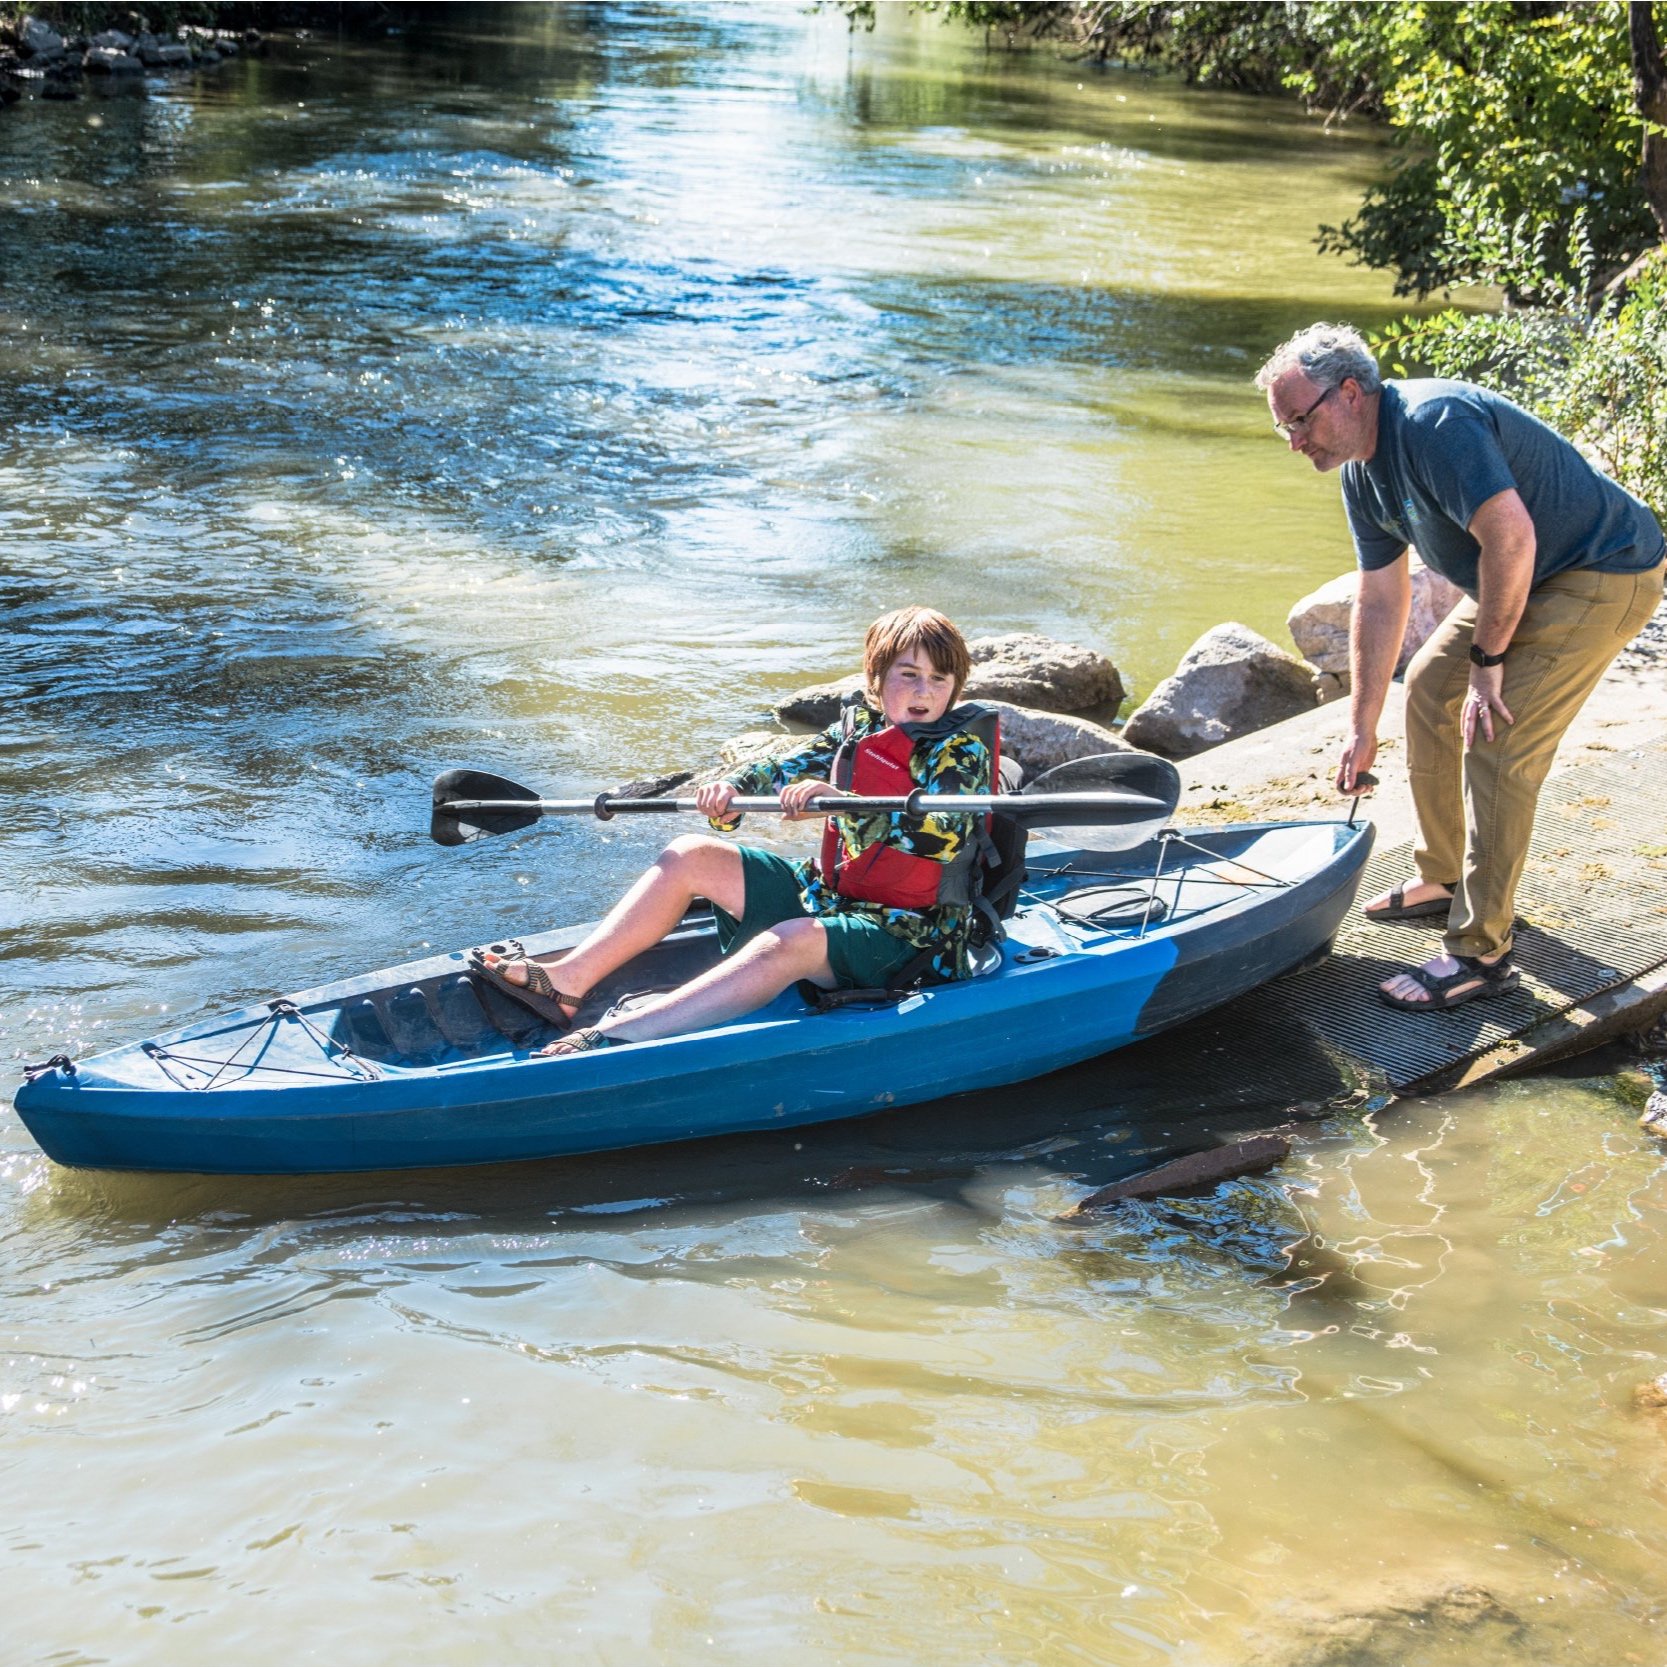 Kayak+Put+In+for+Boat+Leg+at+Range+2+River+Relay+2022+Photo+by+David+Ricketts.jpg